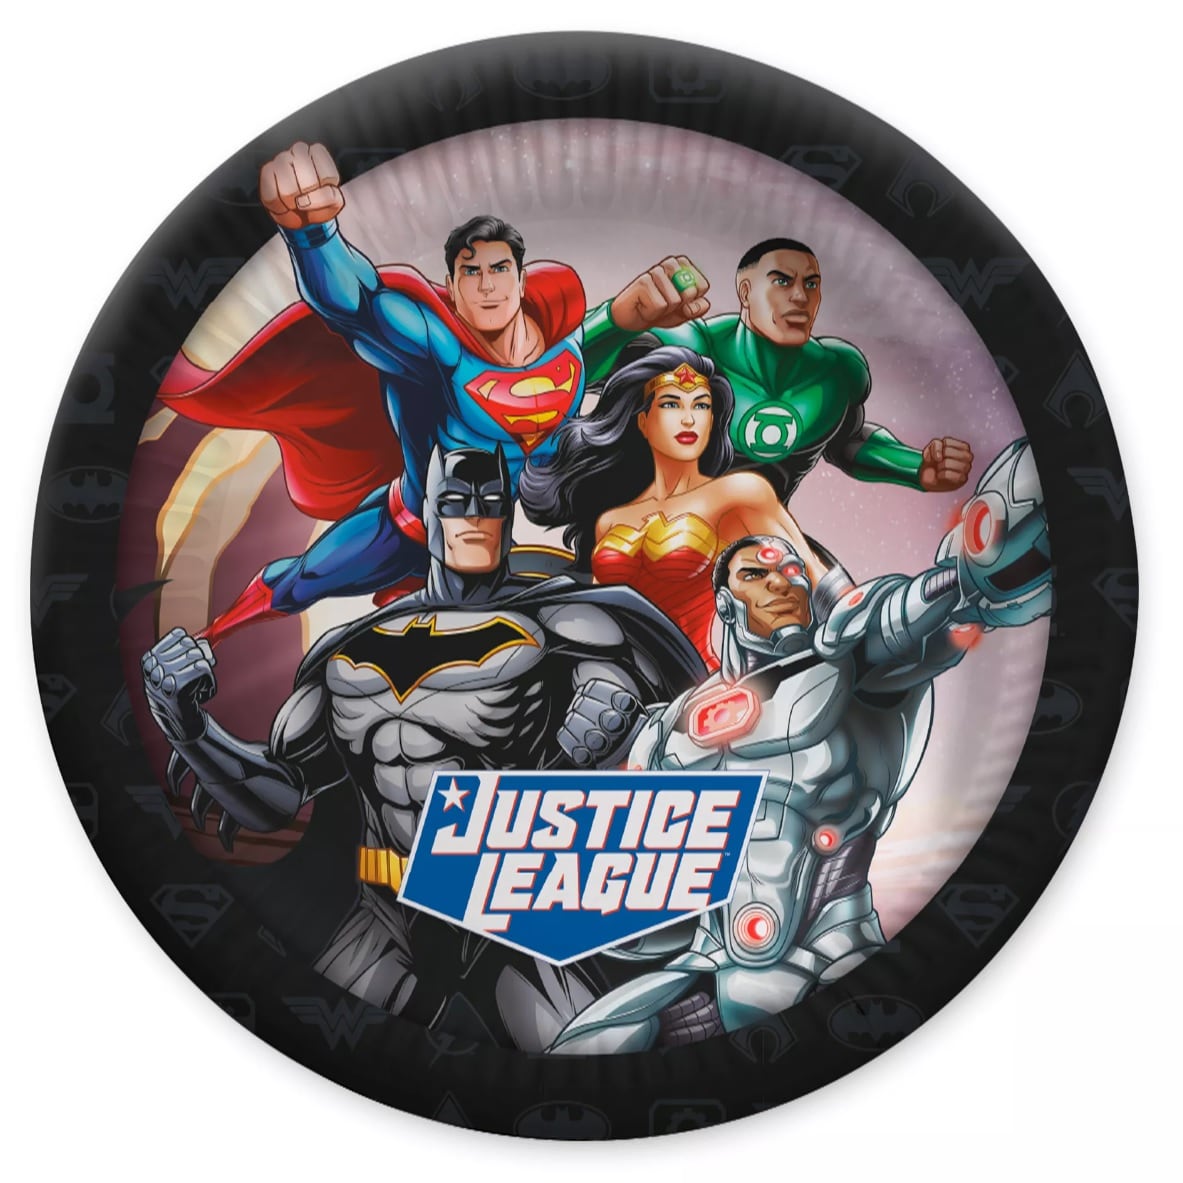 Justice League - Tallrikar 10-pack